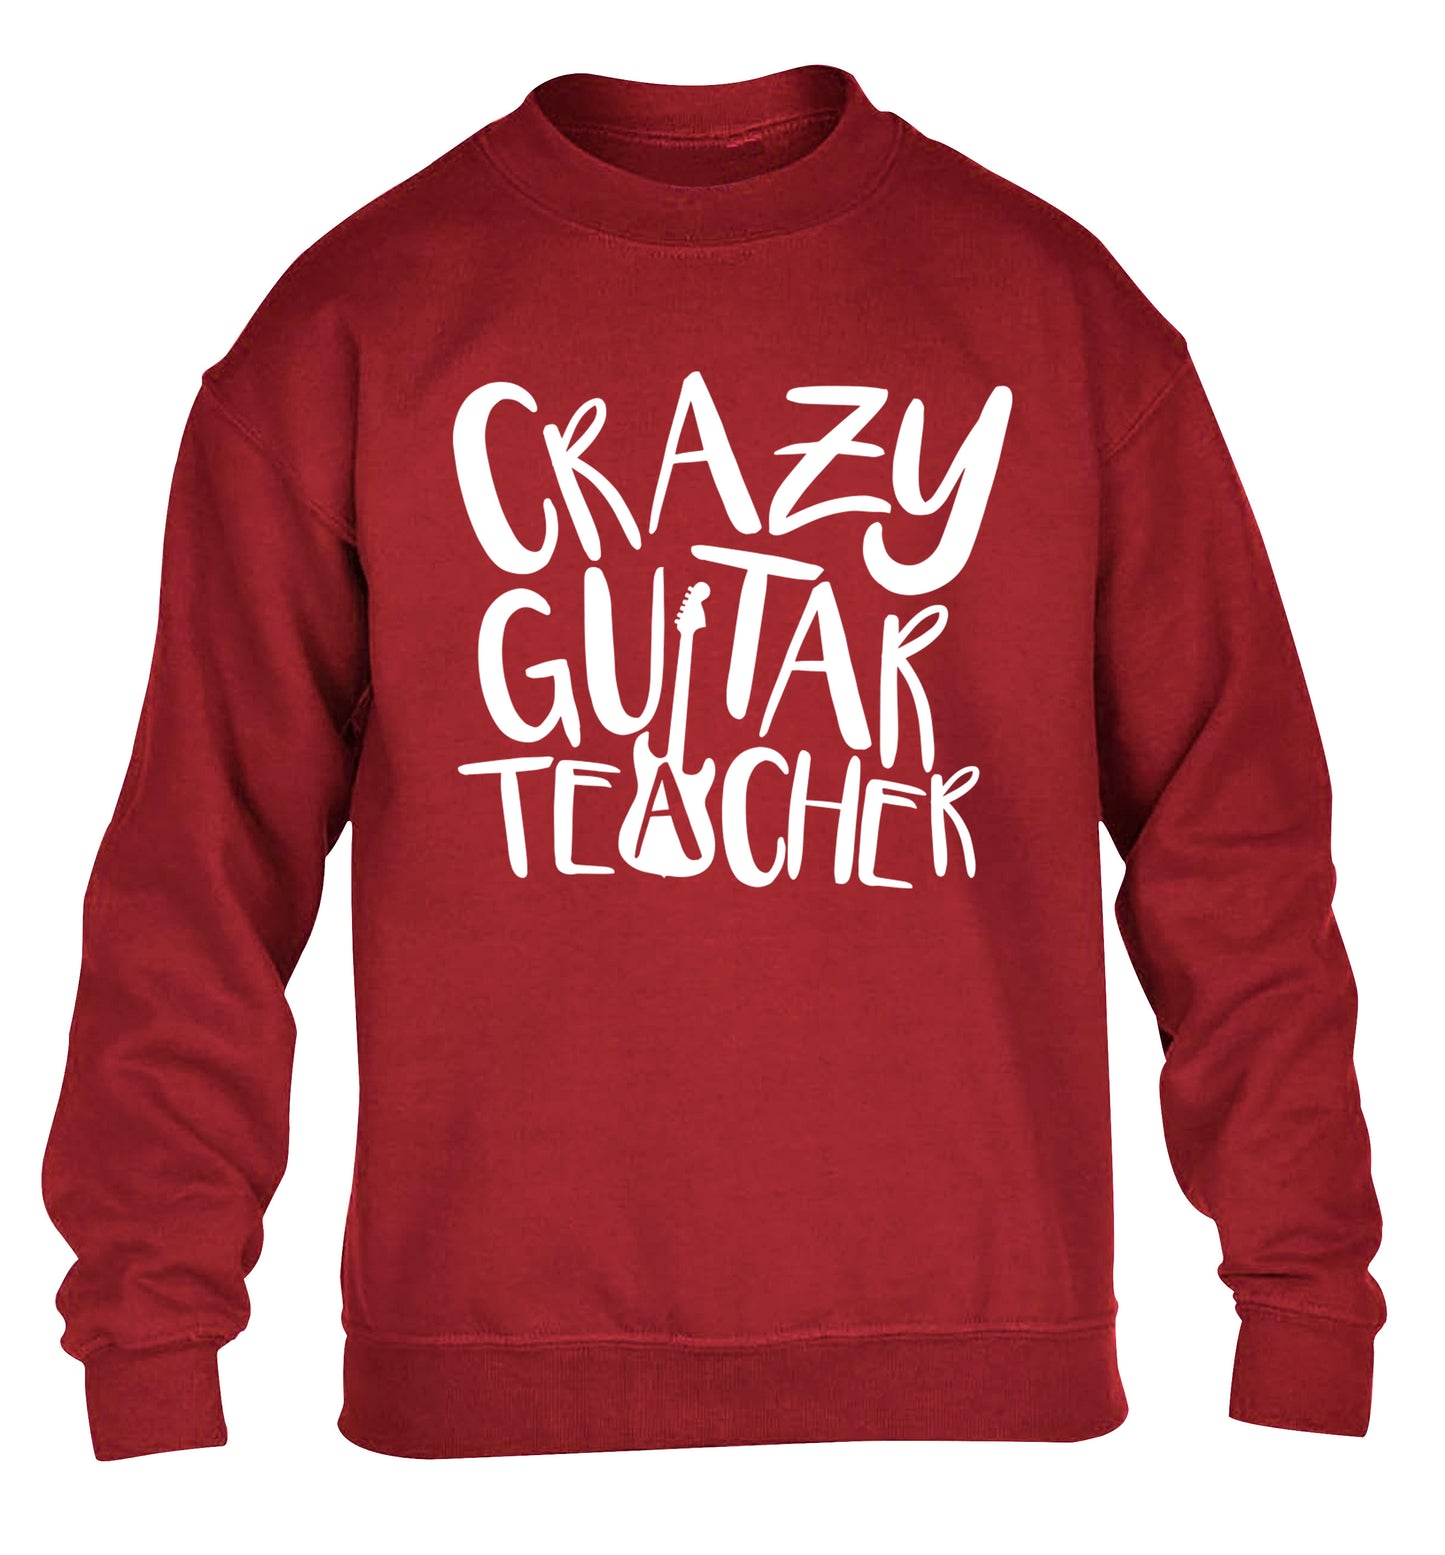 Crazy guitar teacher children's grey sweater 12-13 Years